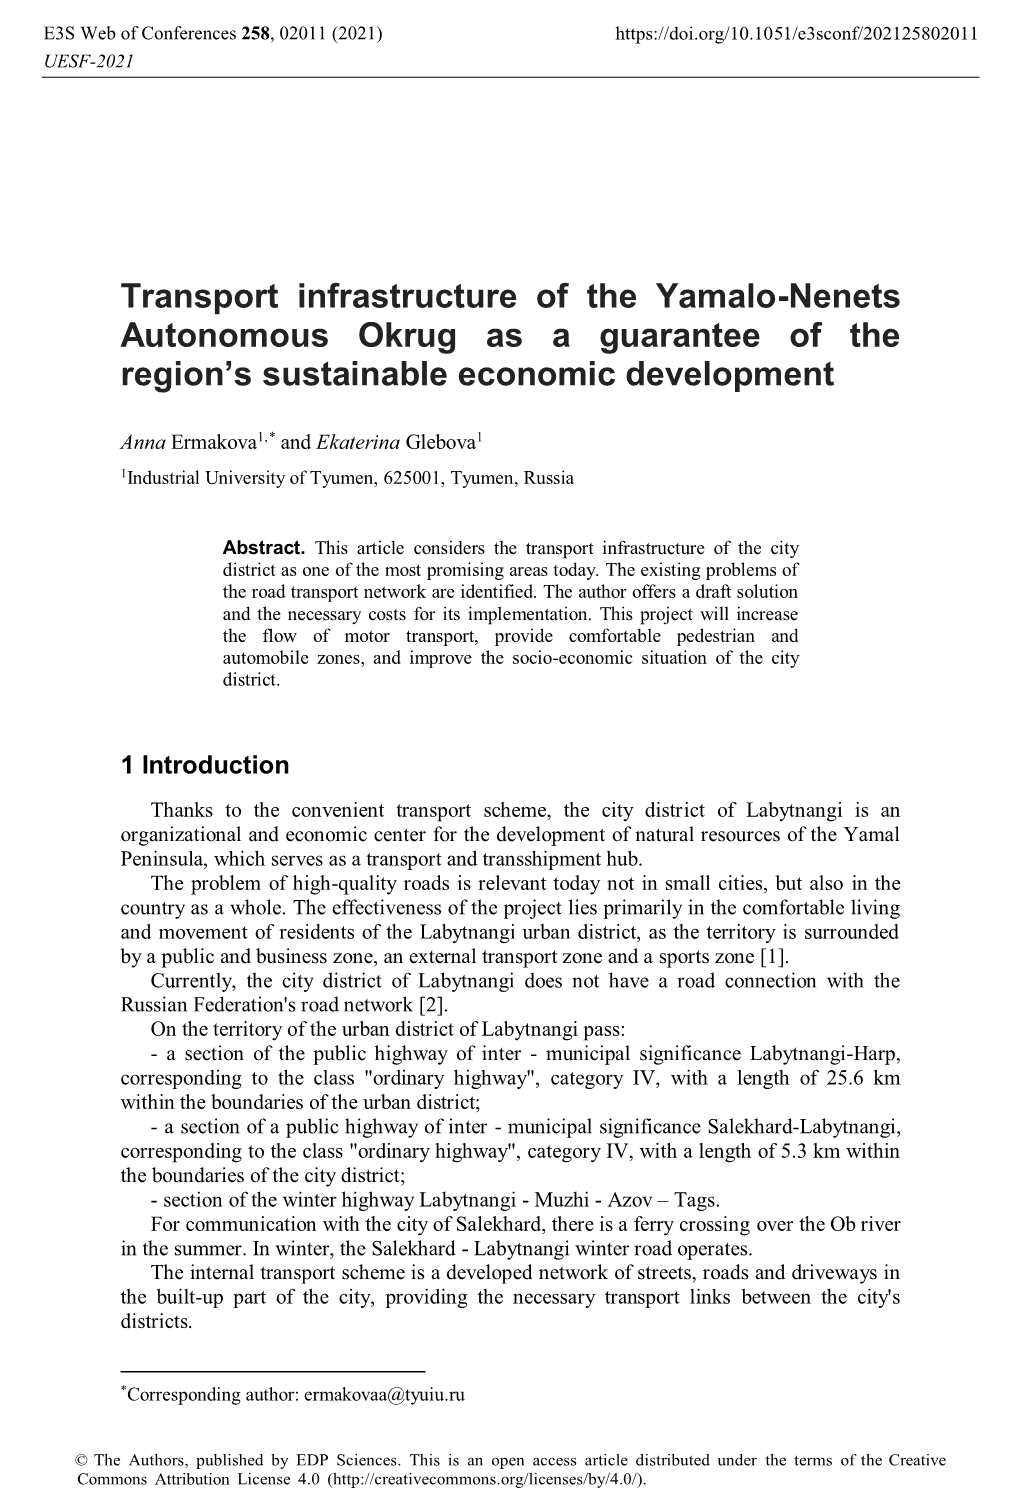 Transport Infrastructure of the Yamalo-Nenets Autonomous Okrug As a Guarantee of the Region's Sustainable Economic Development